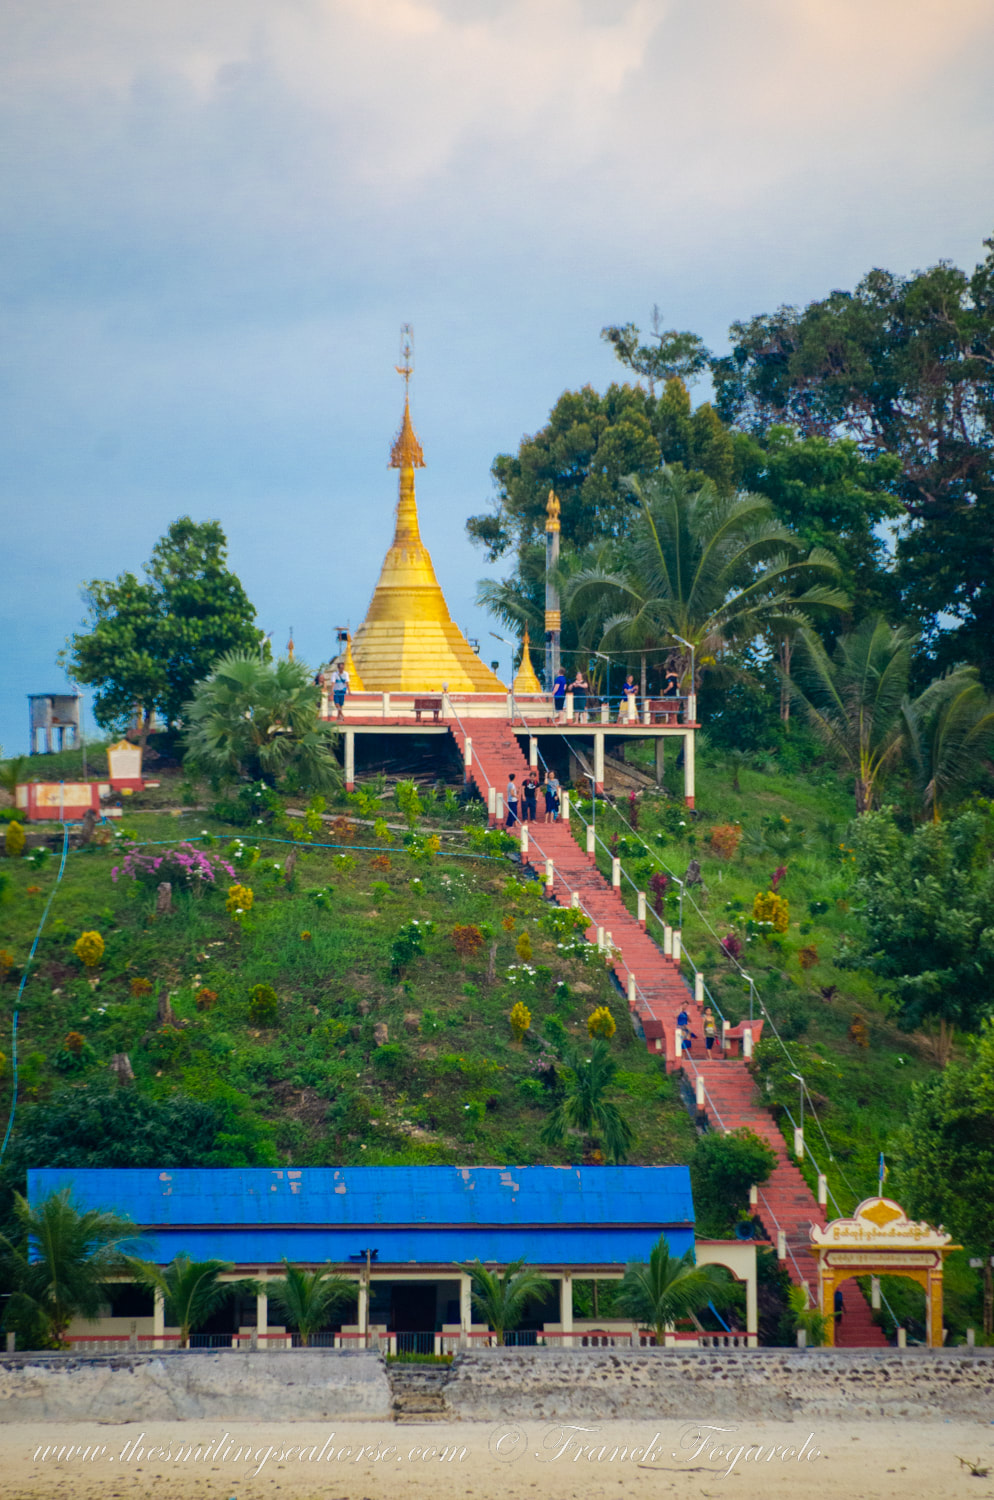 back in Myanmar, post covid trip report!